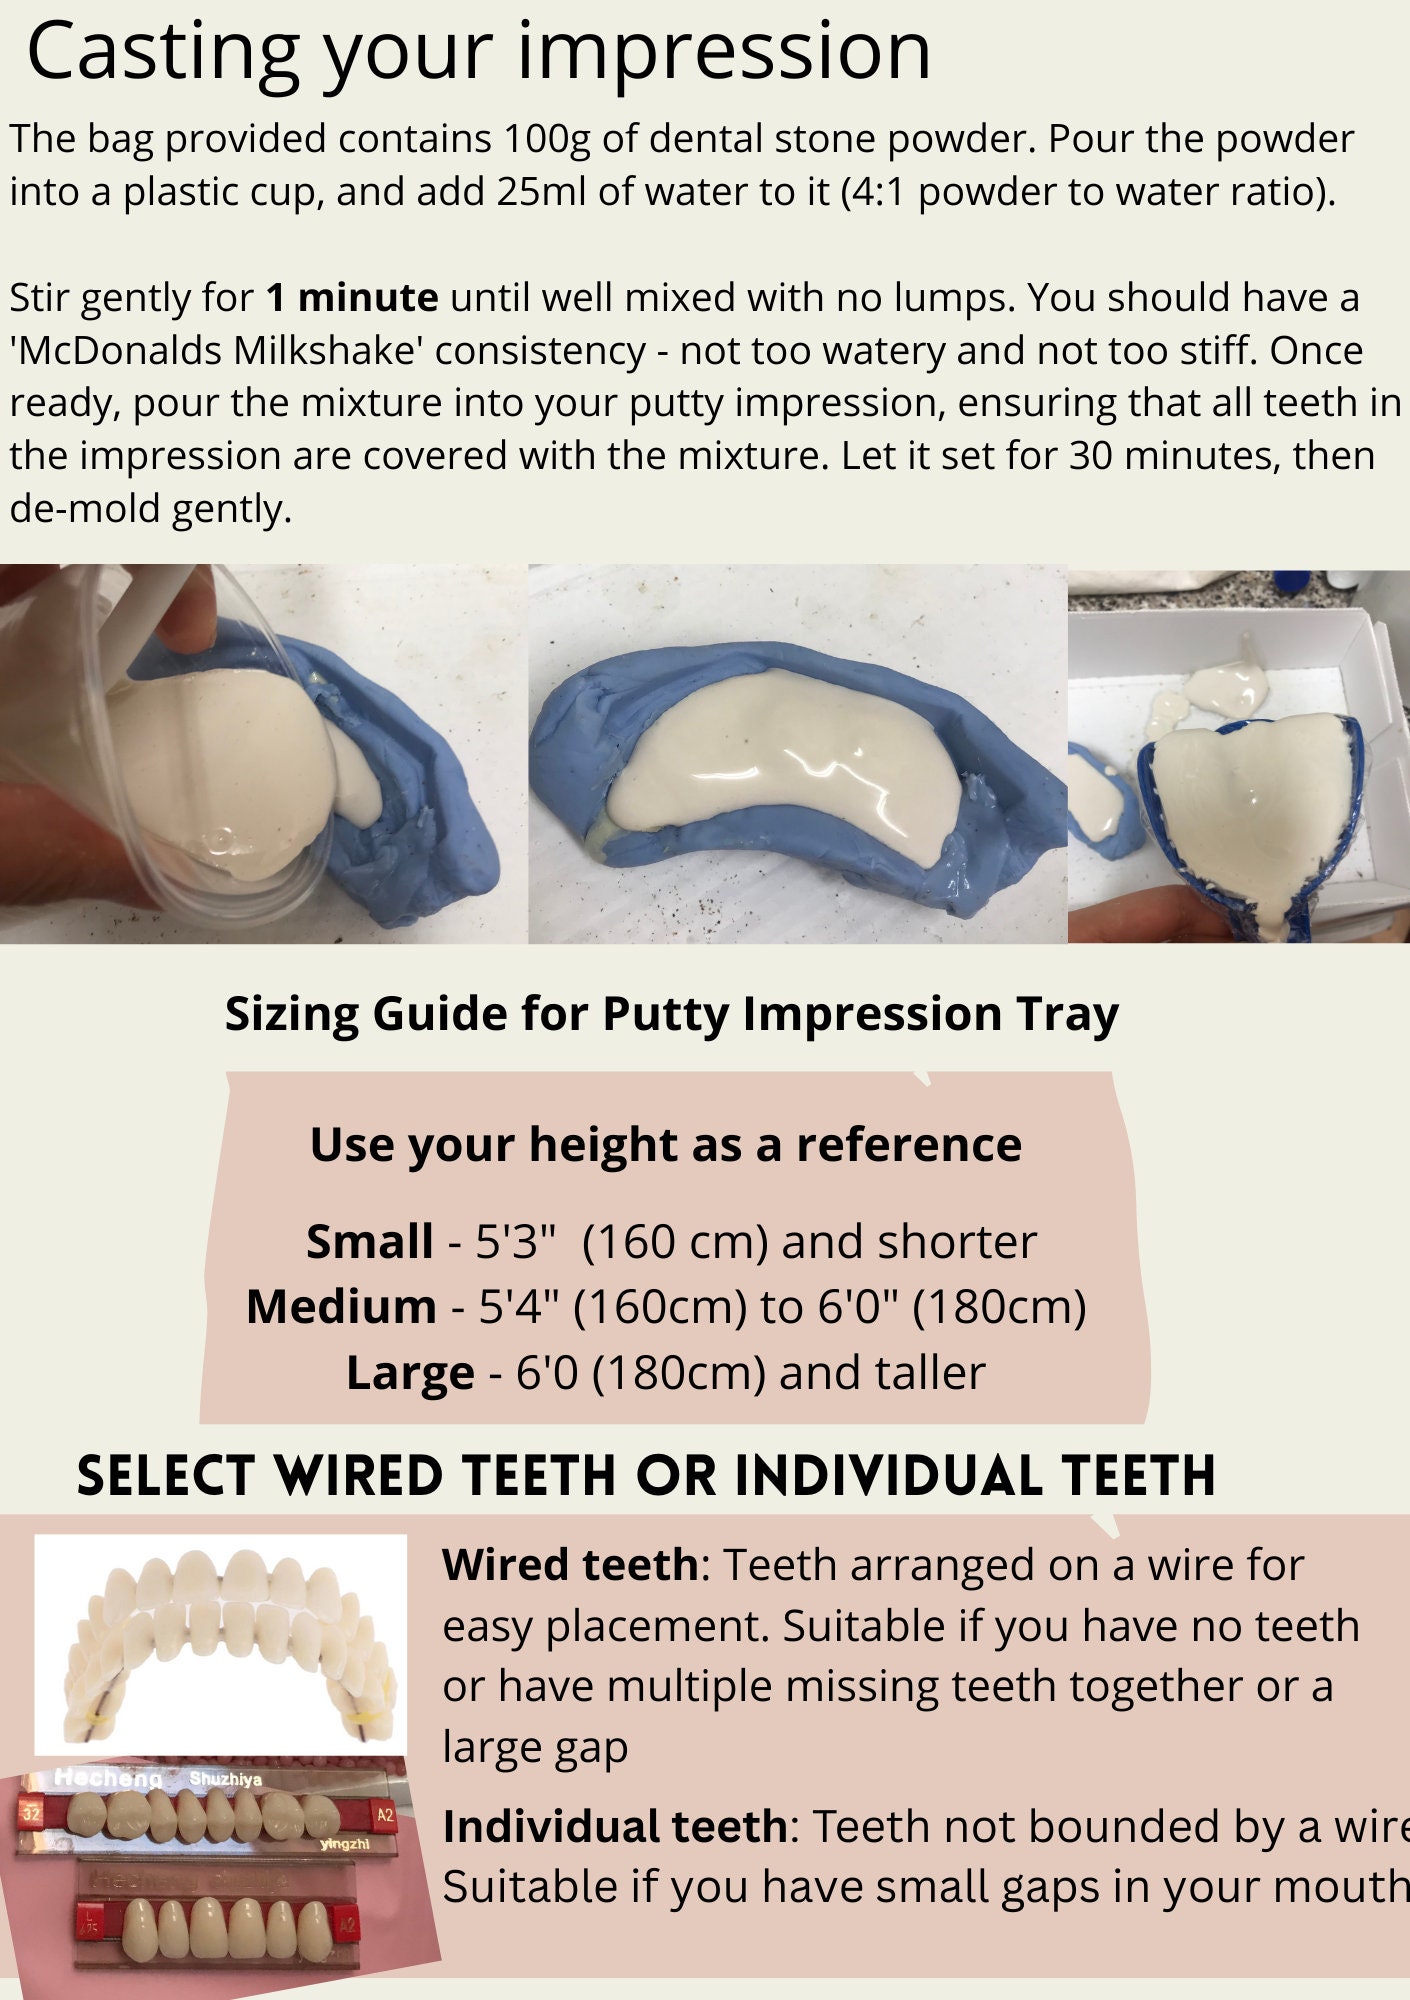 Home Denture Making Kit - Acrylic Teeth Impression Kit